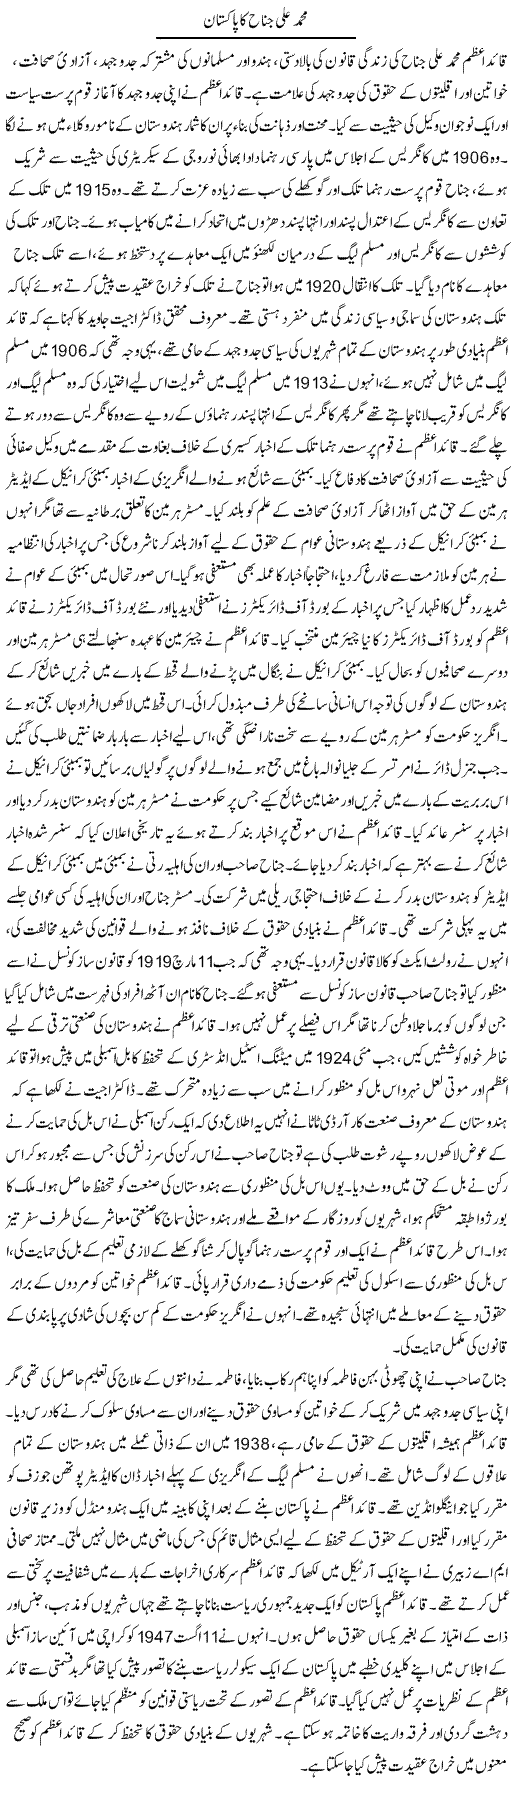 Muhammad Ali Jinnah Express Column Tauseef Ahmed 26 December 2010